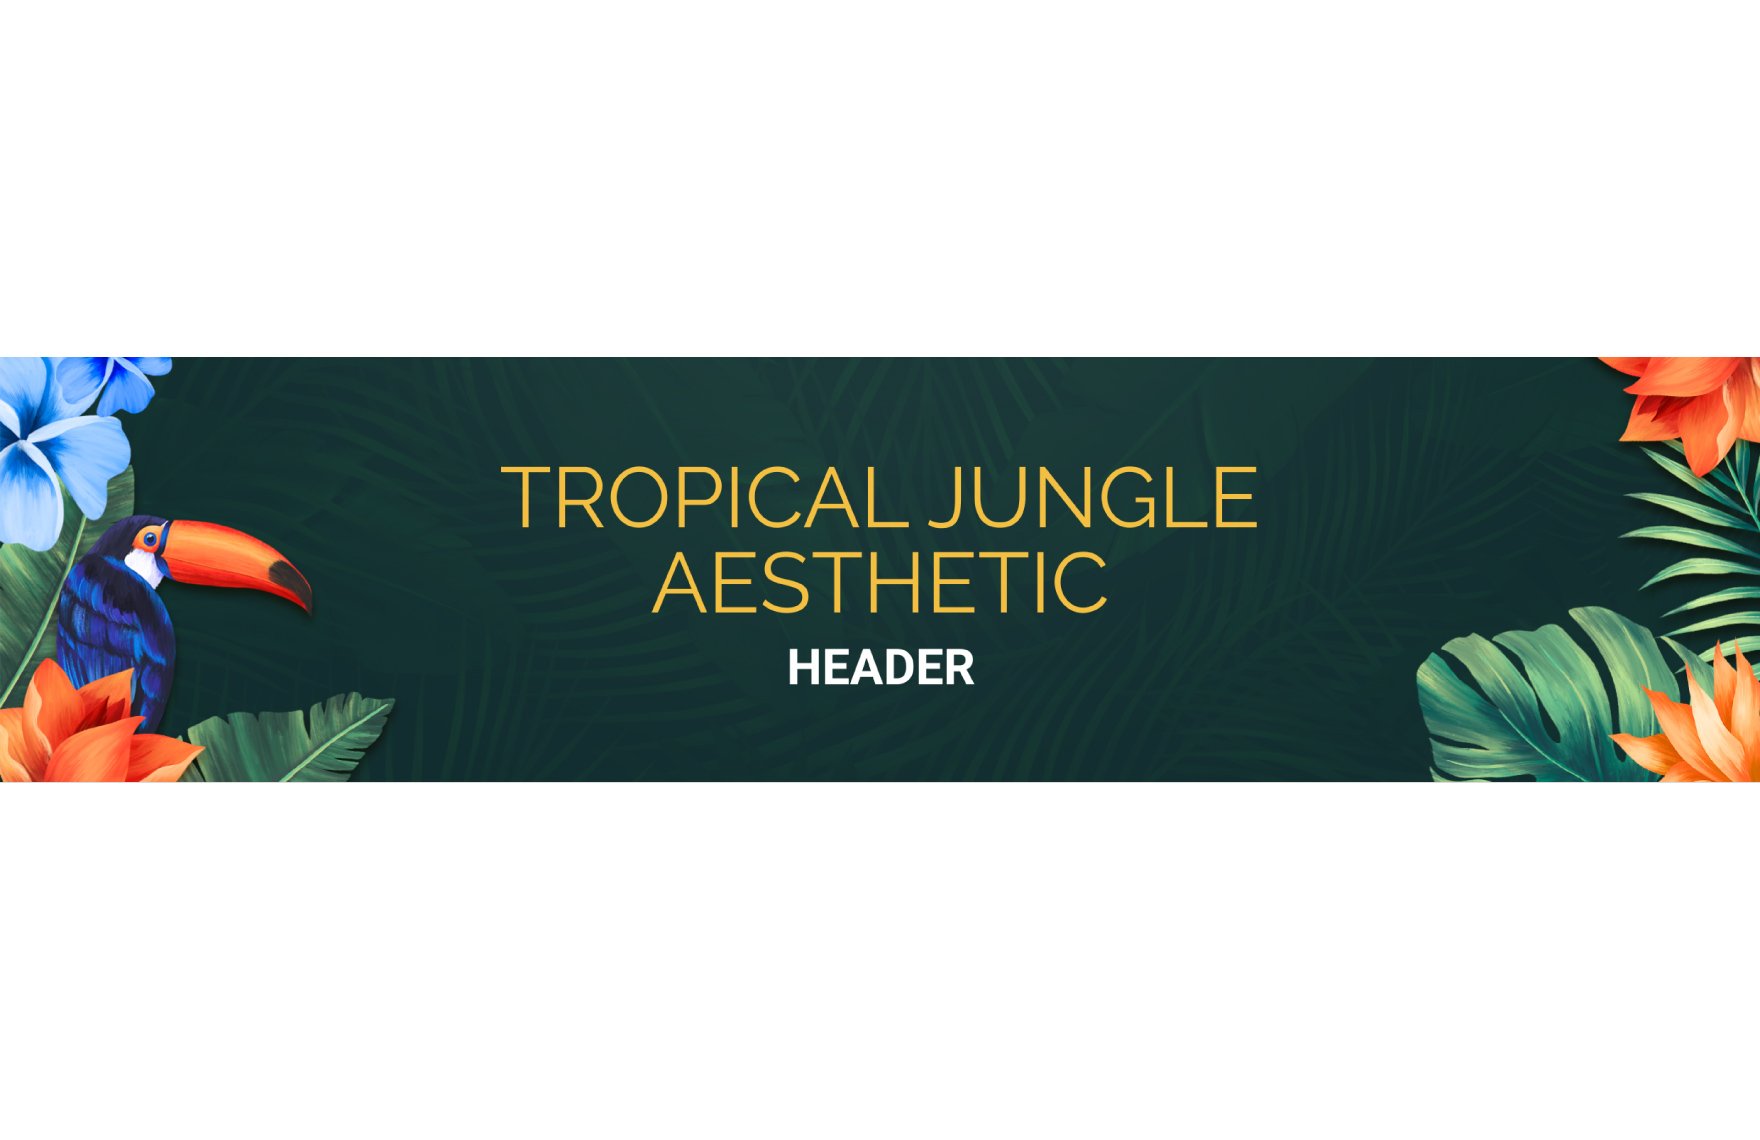 Tropical Jungle Aesthetic Header Template